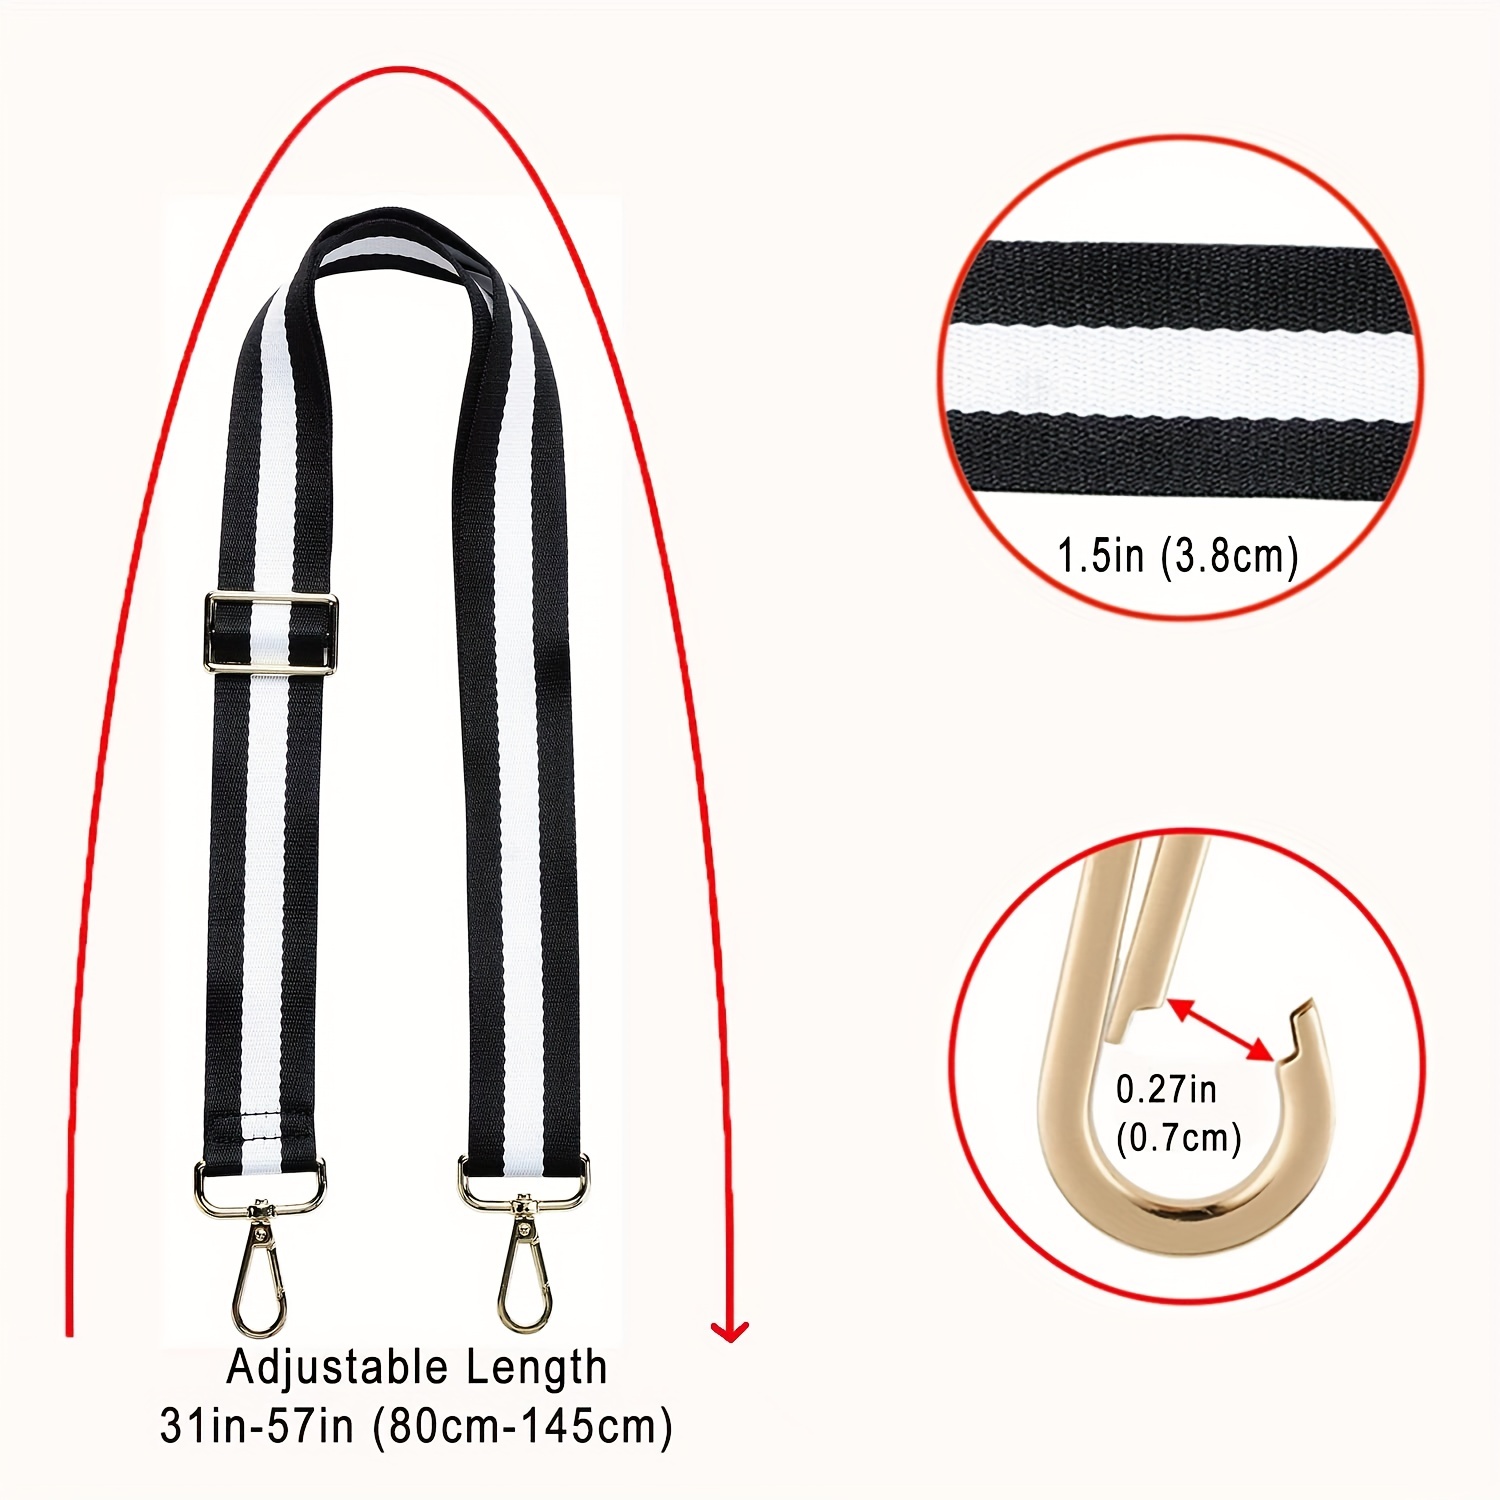 Removable Handbag Strap: Black & White Adjustable Striped